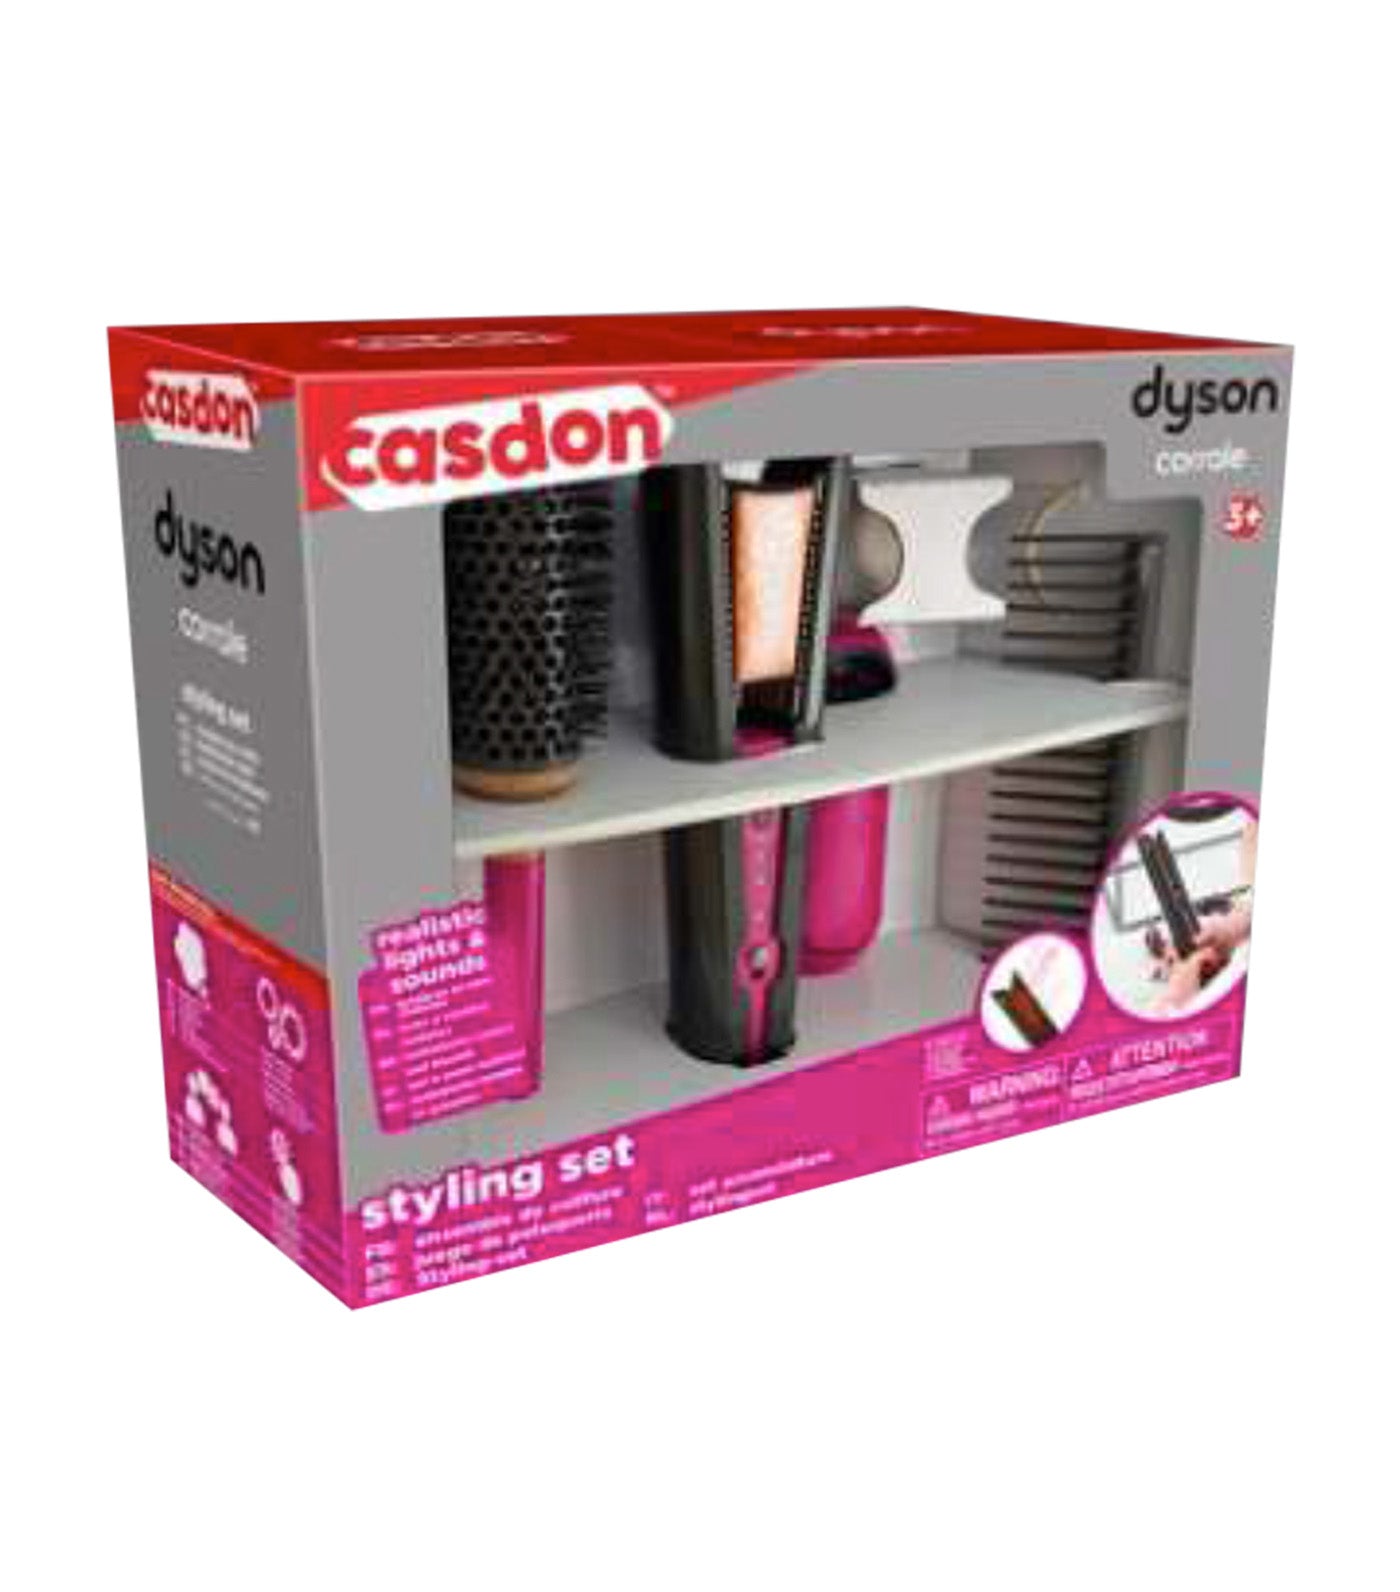 Casdon Dyson Corrale Styling Playset